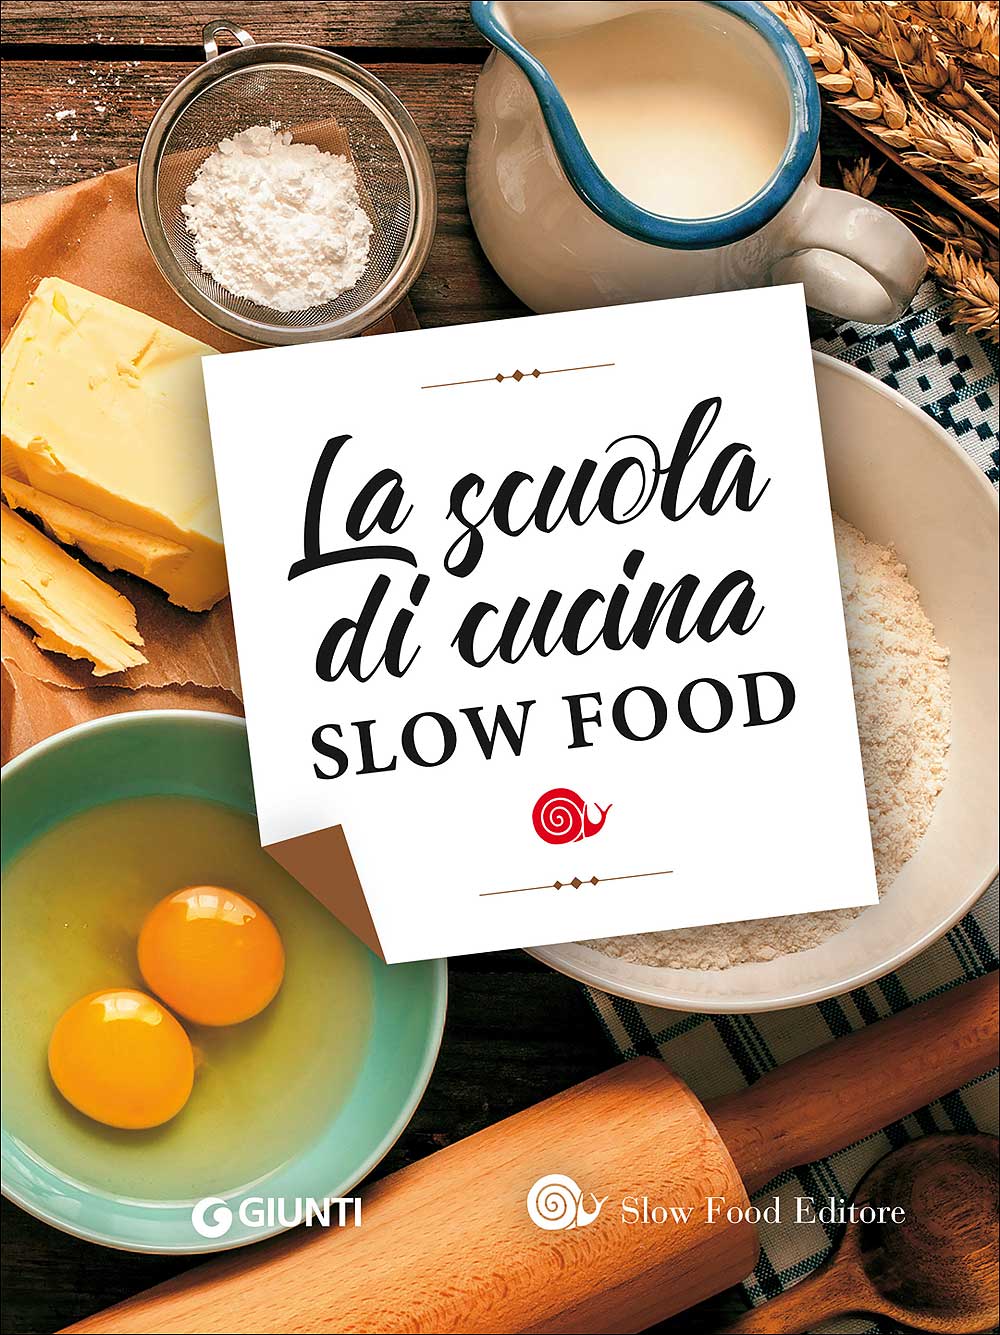 La Scuola di cucina Slow Food